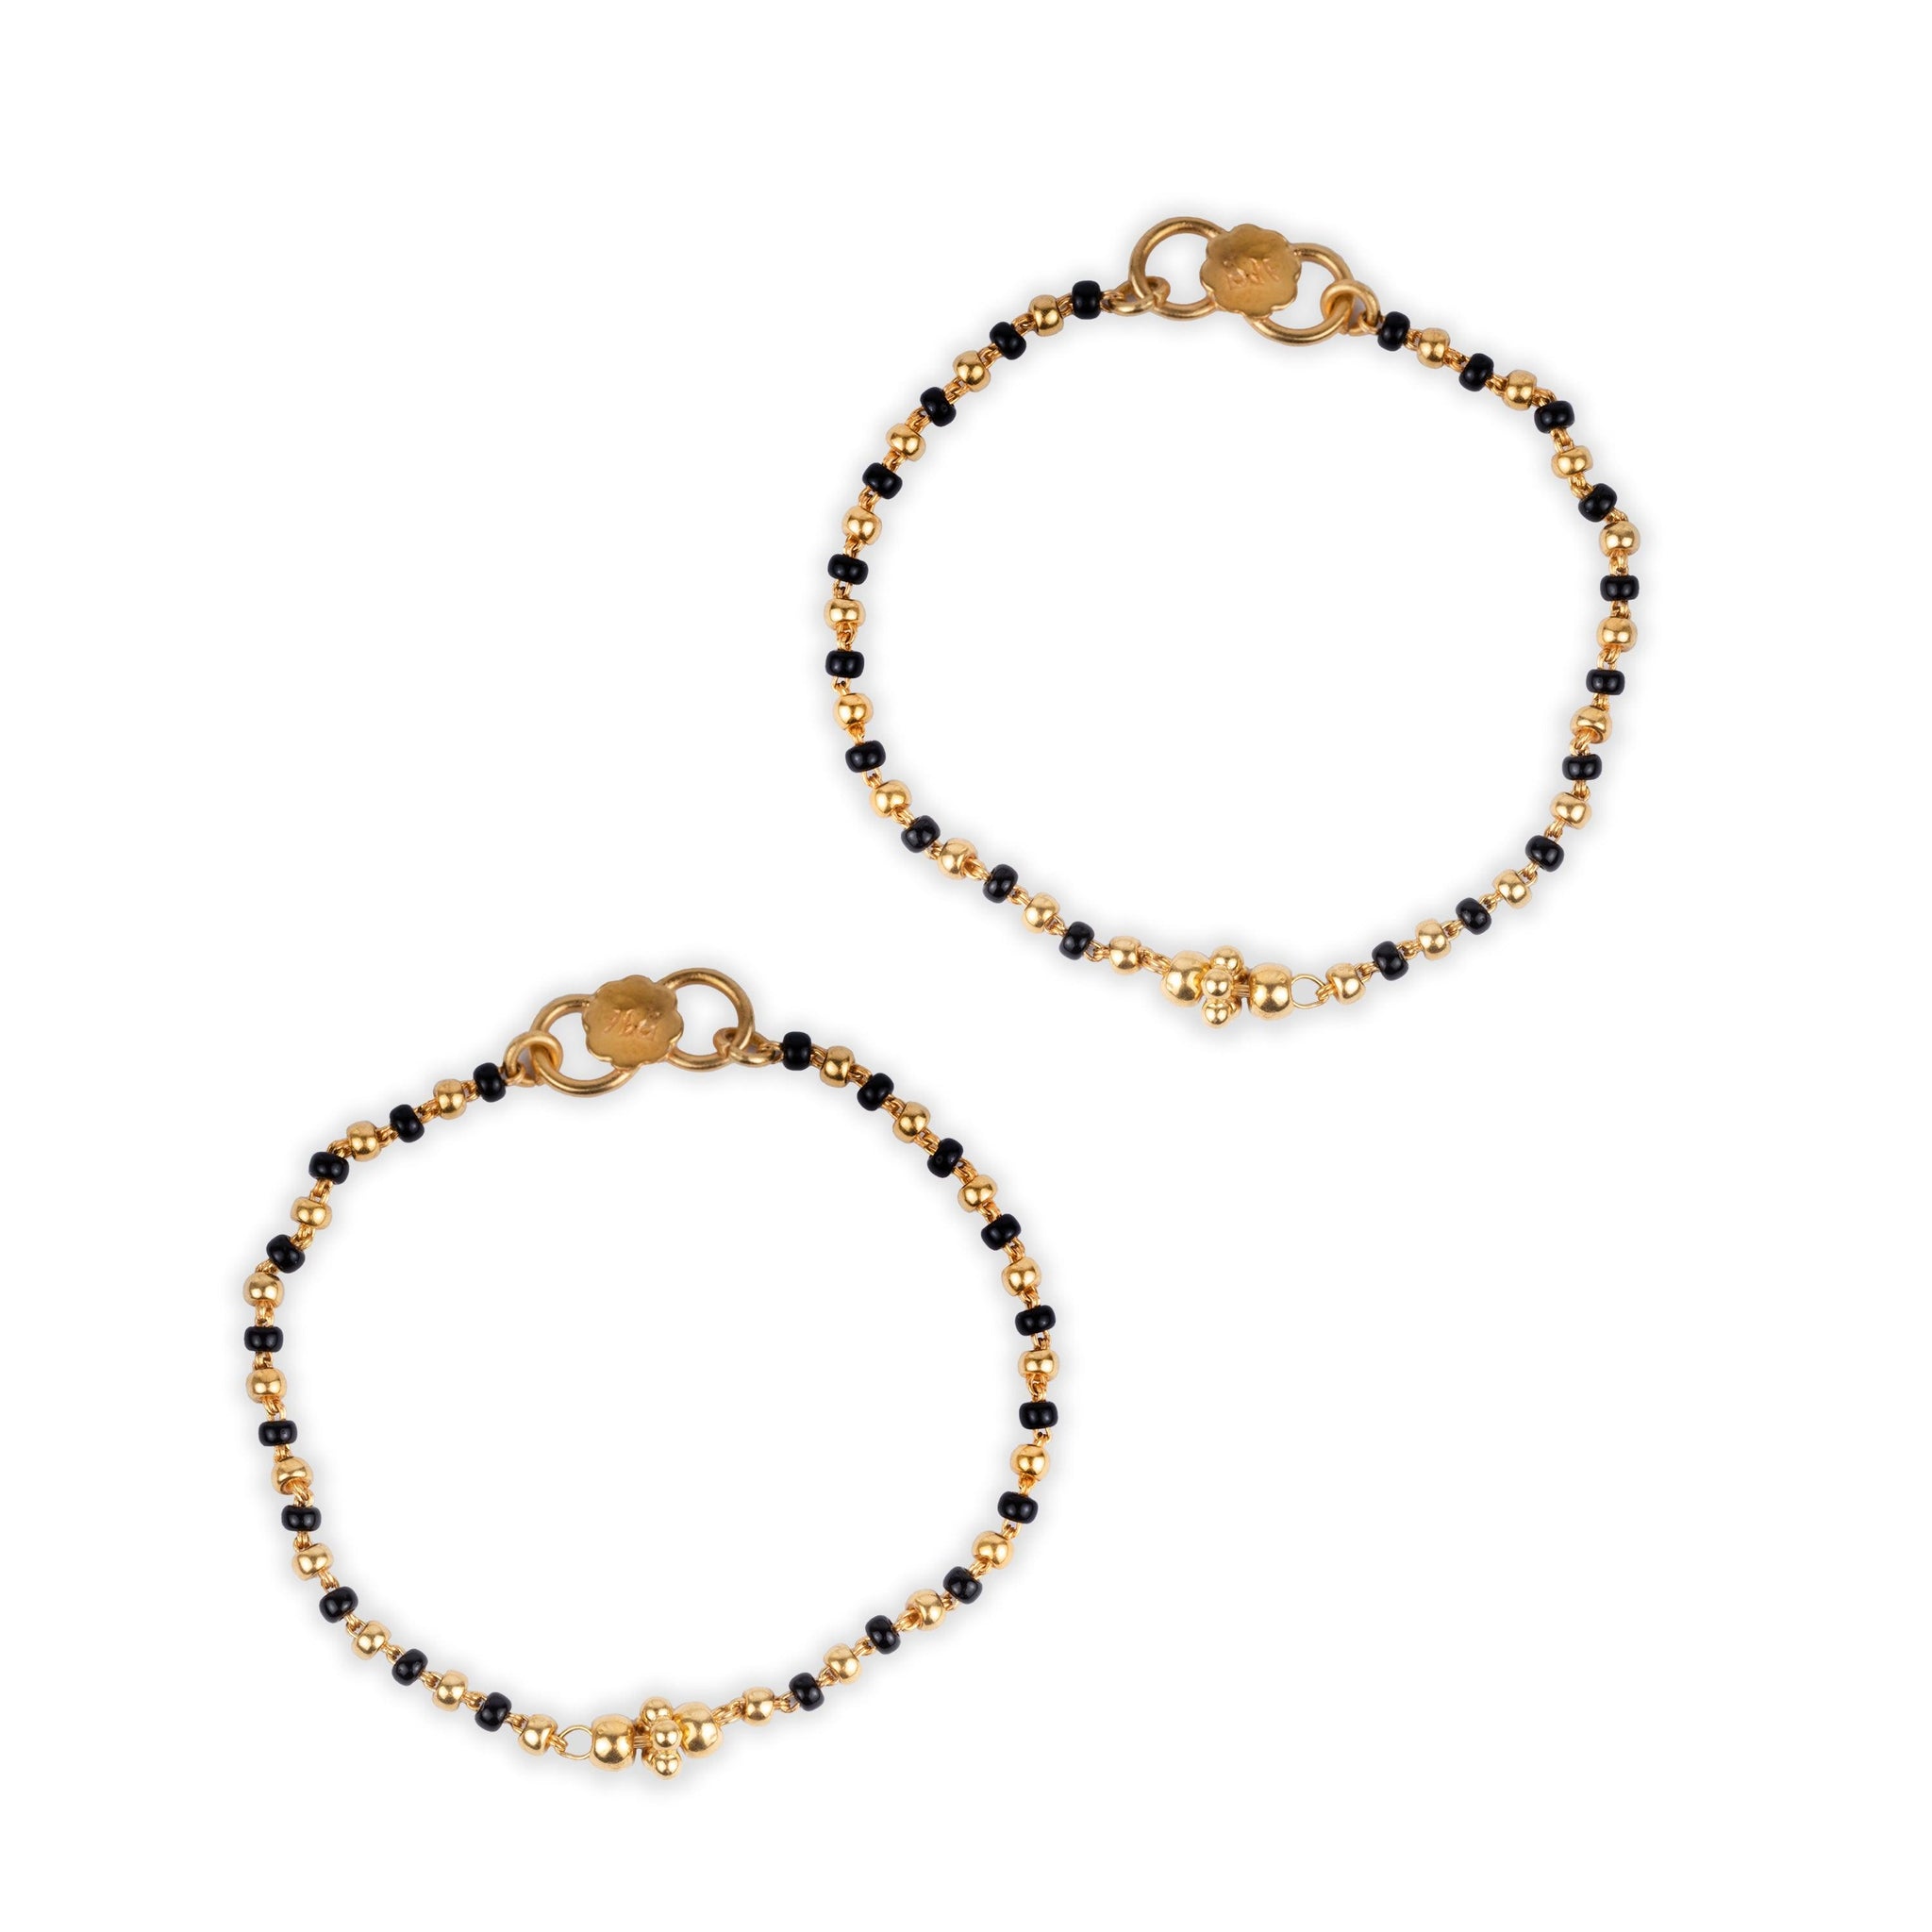 22ct Gold Children's Bracelets with Black Beads CBR-7834